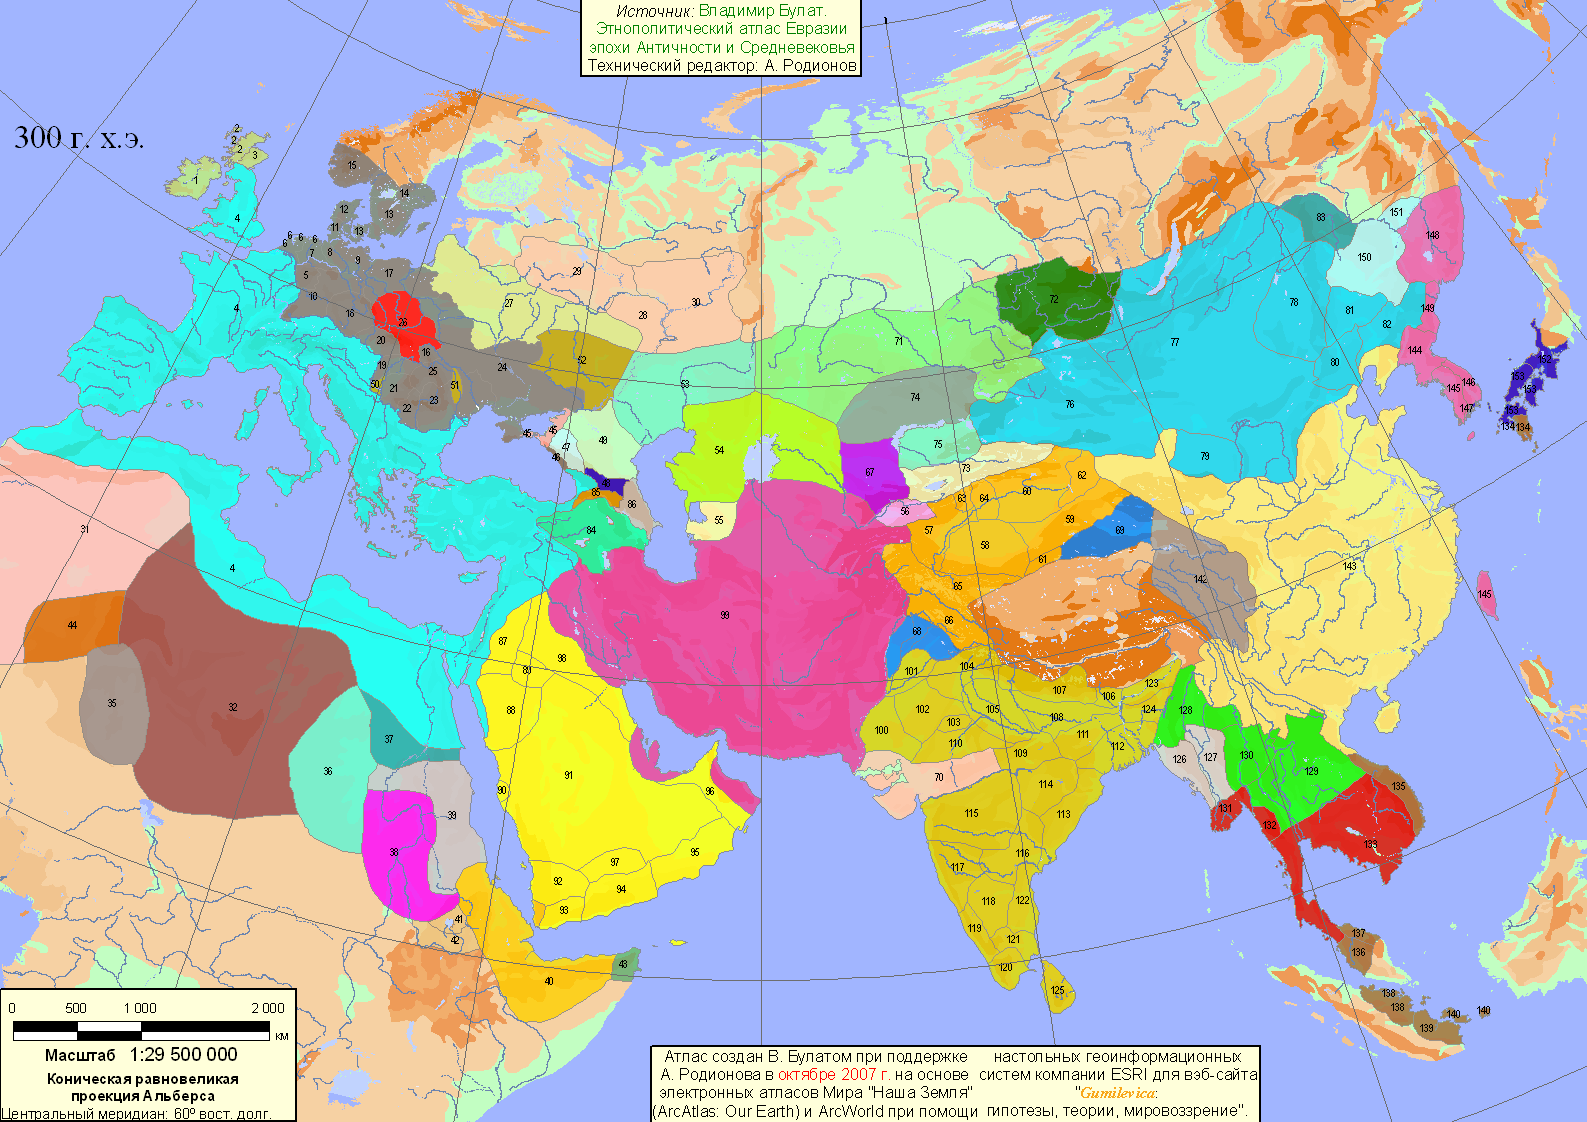 Eurasia - 300 AD (315 Kbytes)